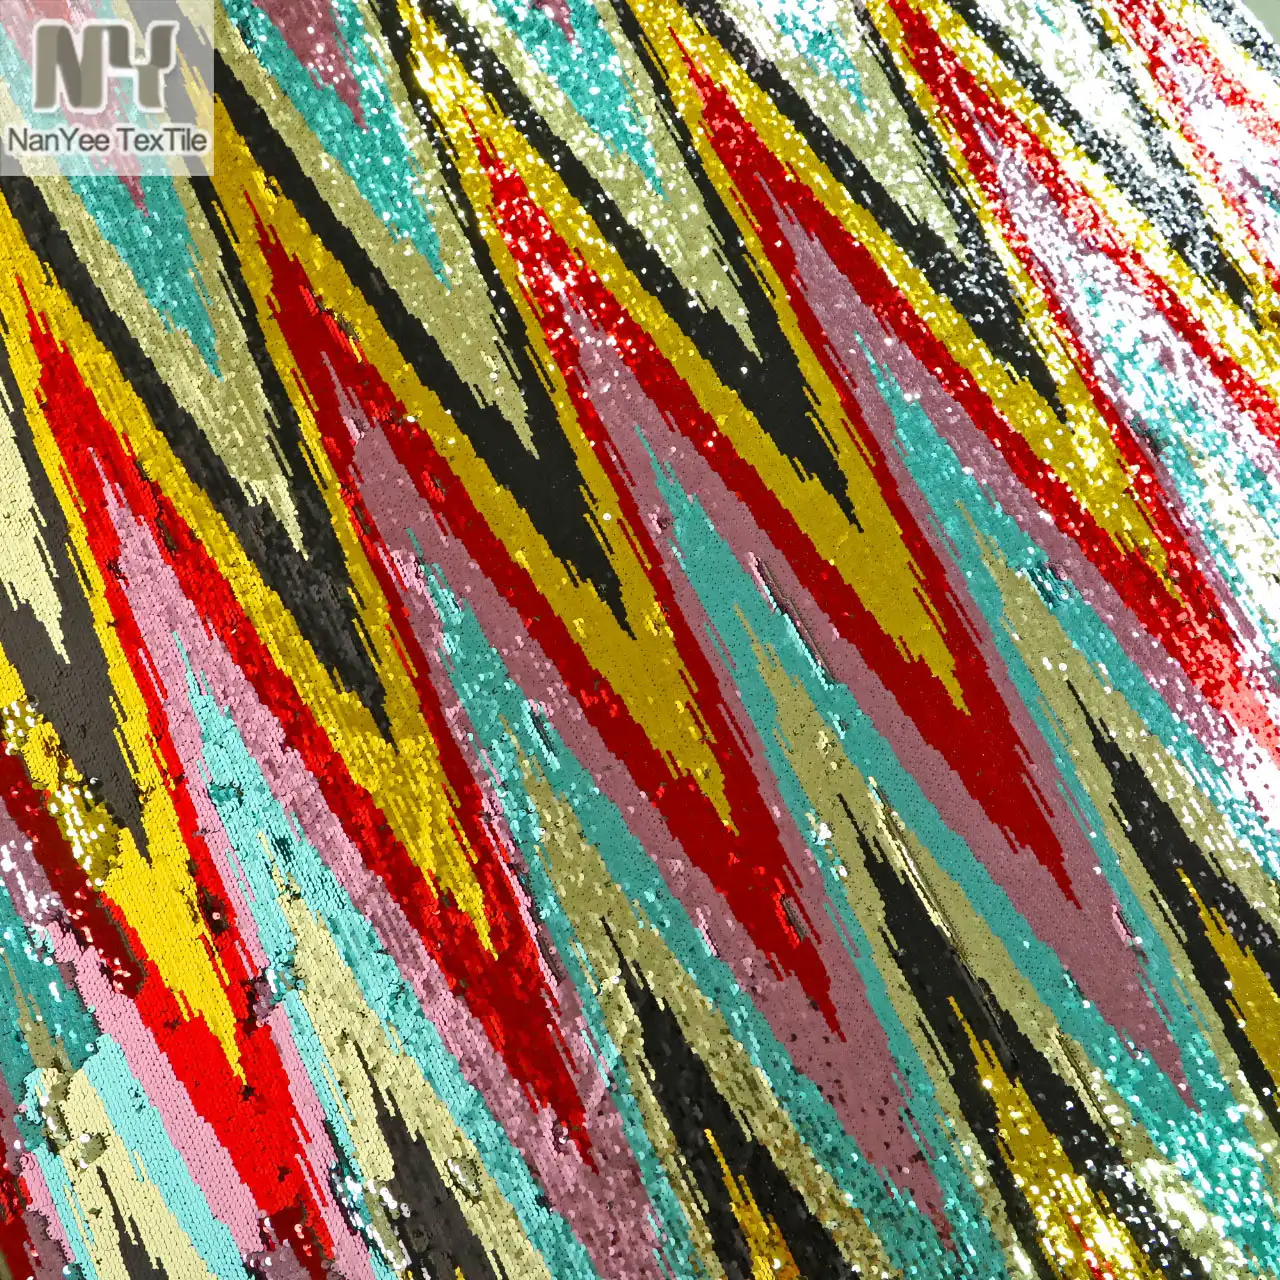 Nanyee textil Shaoxing nuevo arco iris onda racimo negro de lentejuelas rojo Zigzag tela